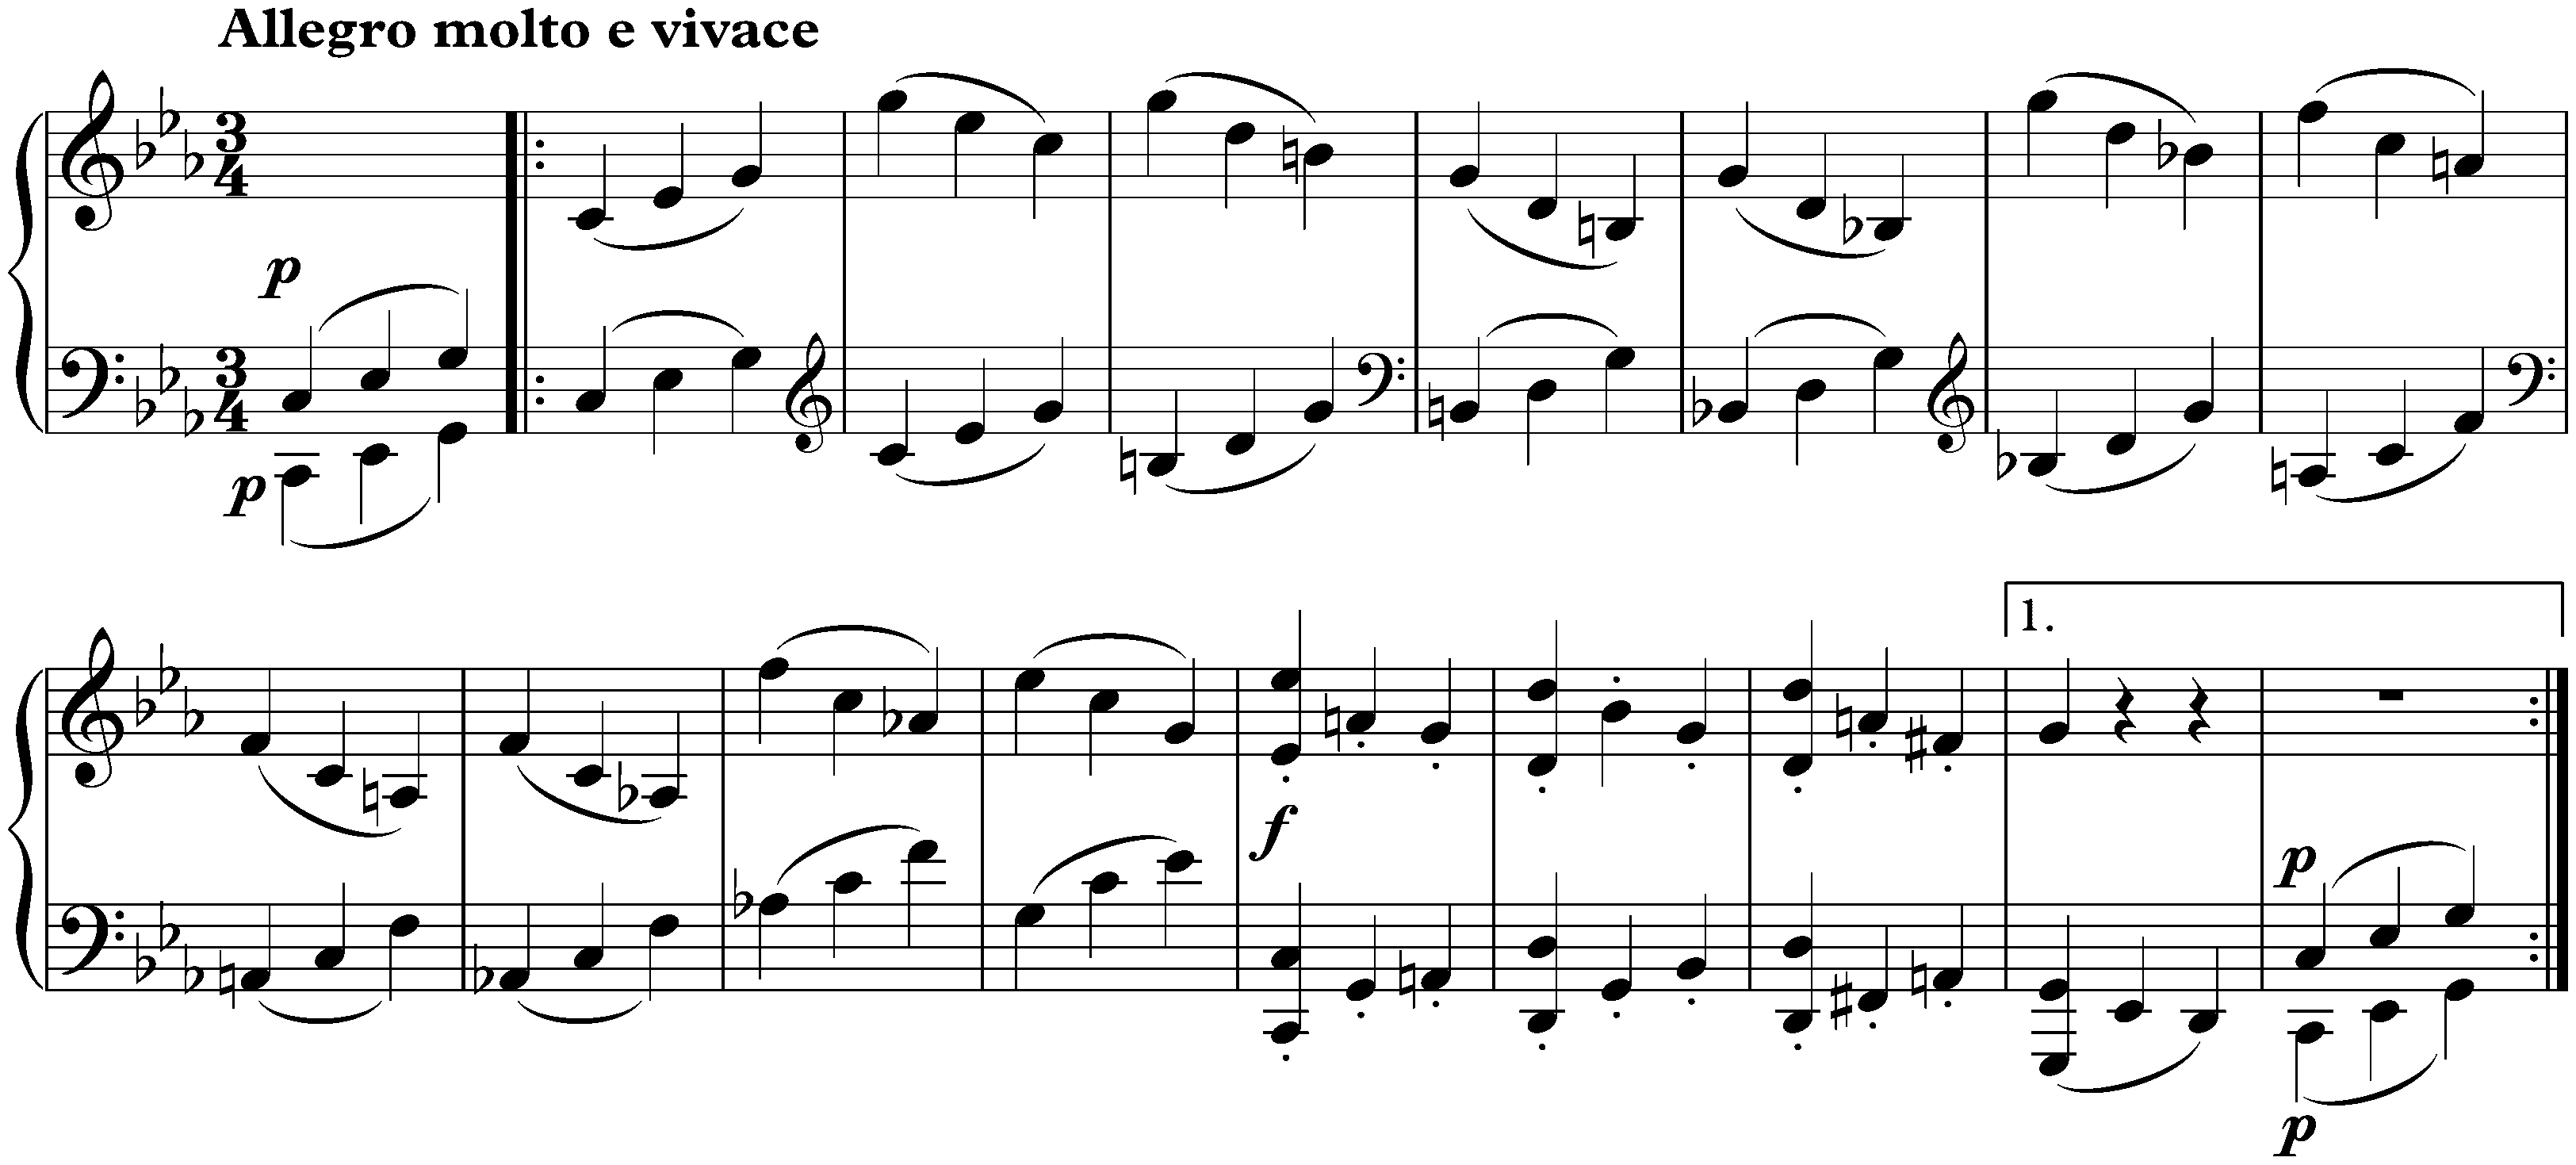 Sonata no. 13 in E-flat major, op. 27 no. 1; 2. Allegro molto e vivace